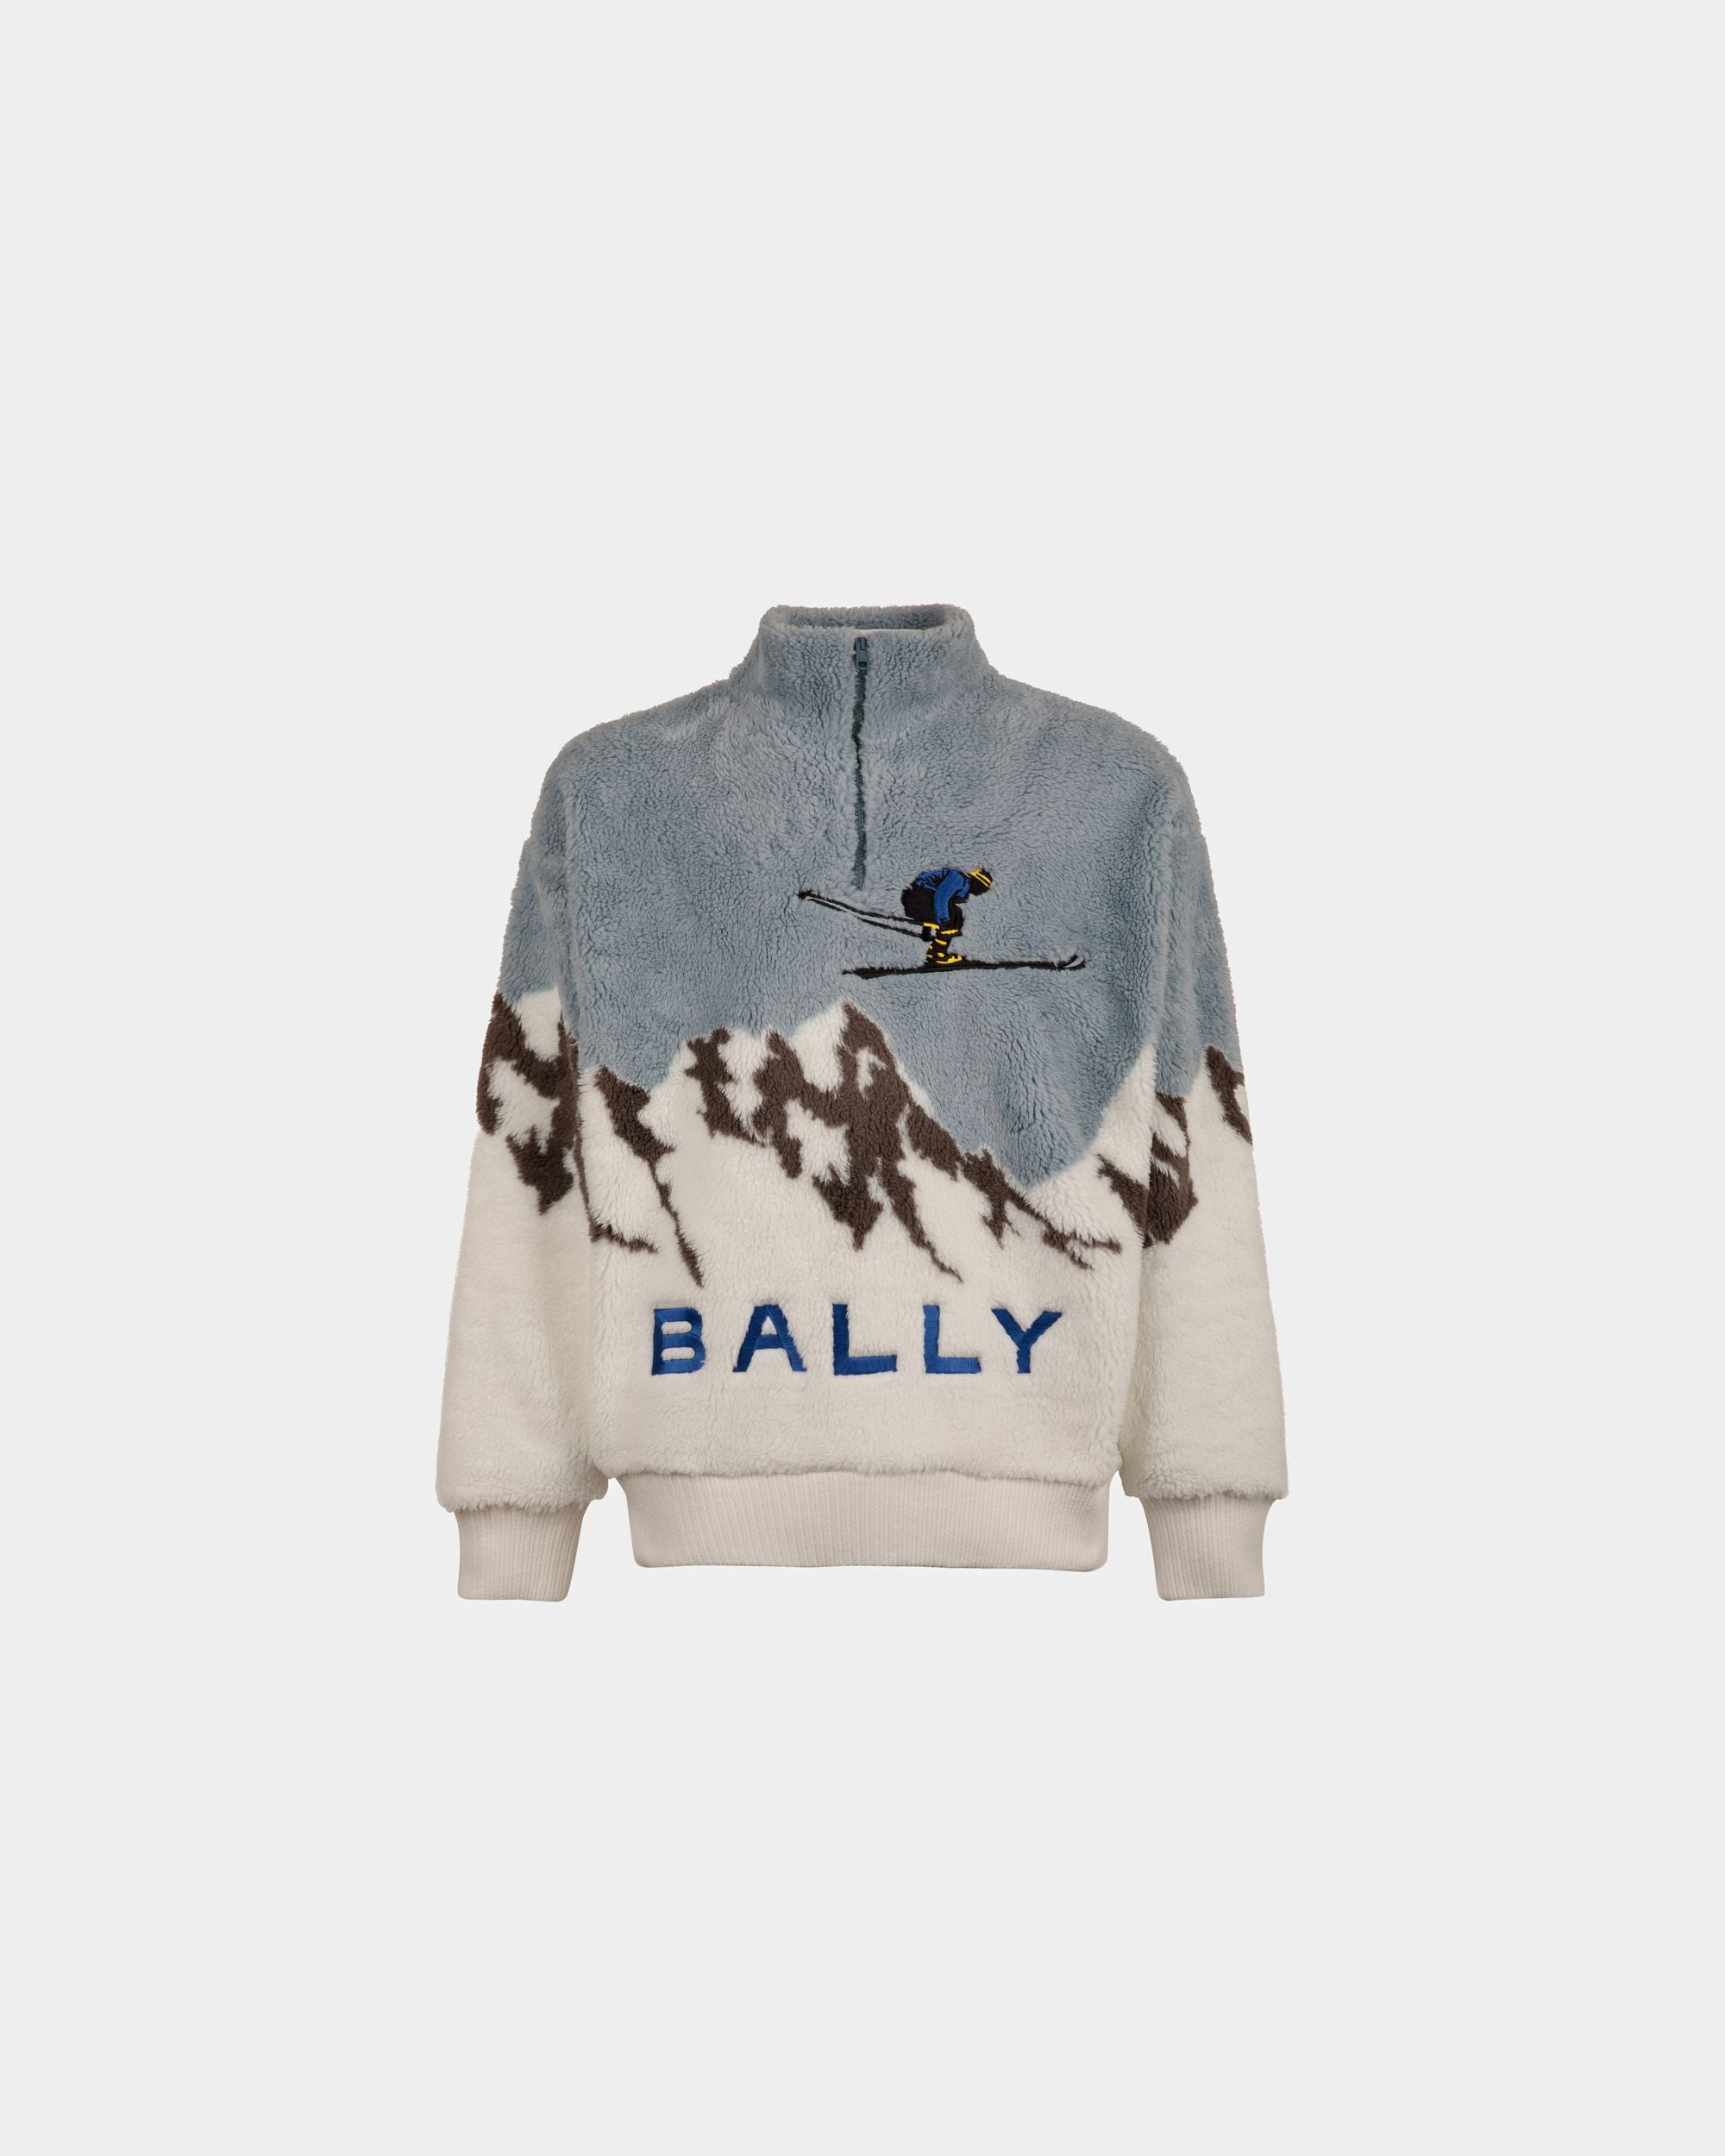 Men's Sweatshirt in Light Blue And White Sherpa Fleece| Bally | Still Life Front